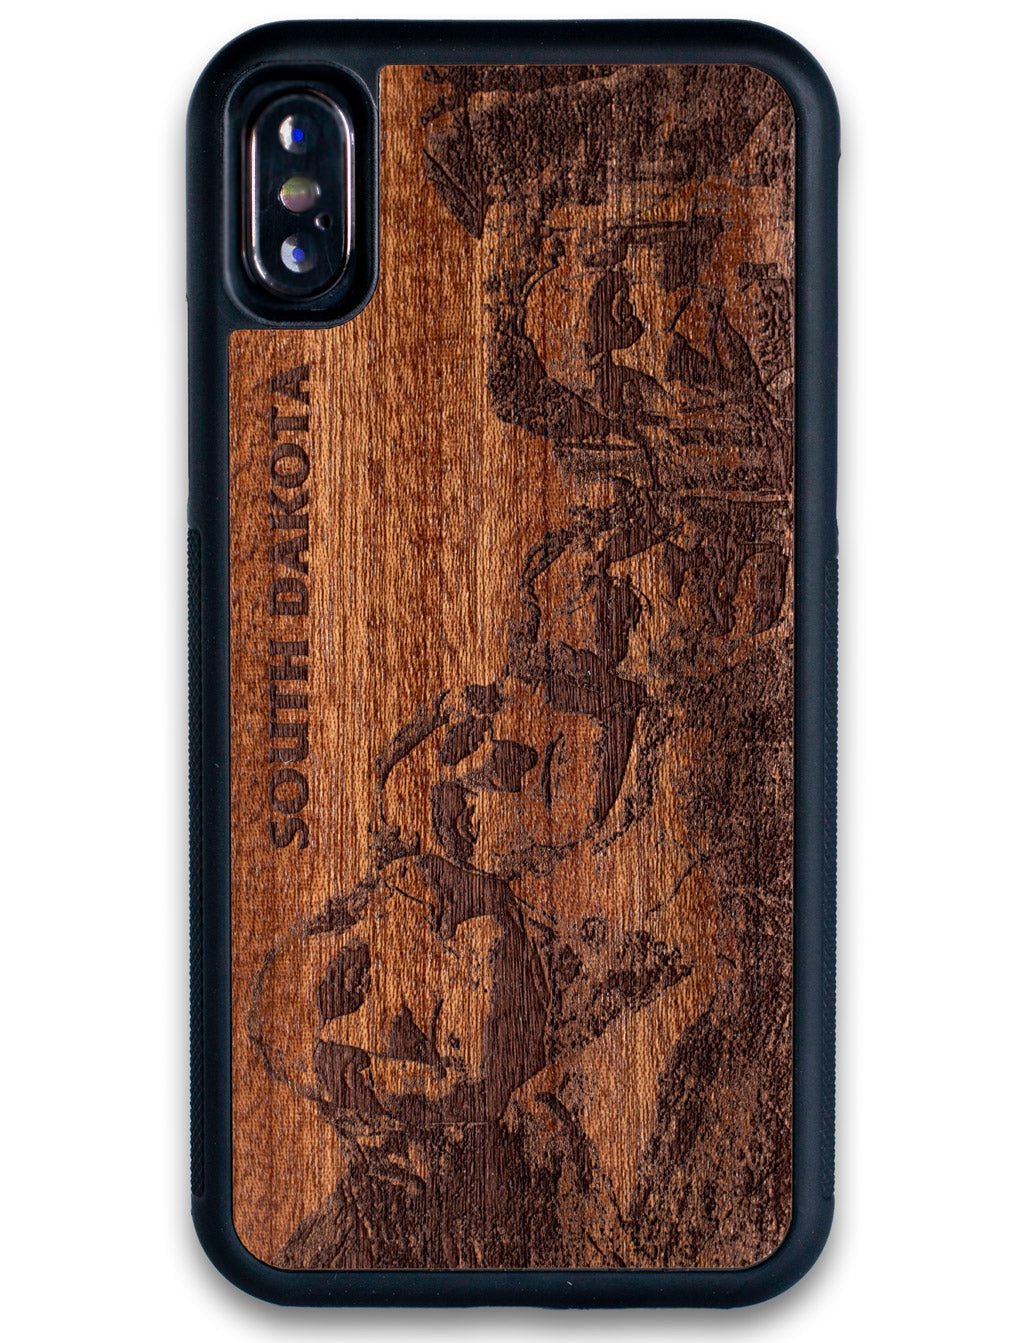 South Dakota flag wooden iPhone X case